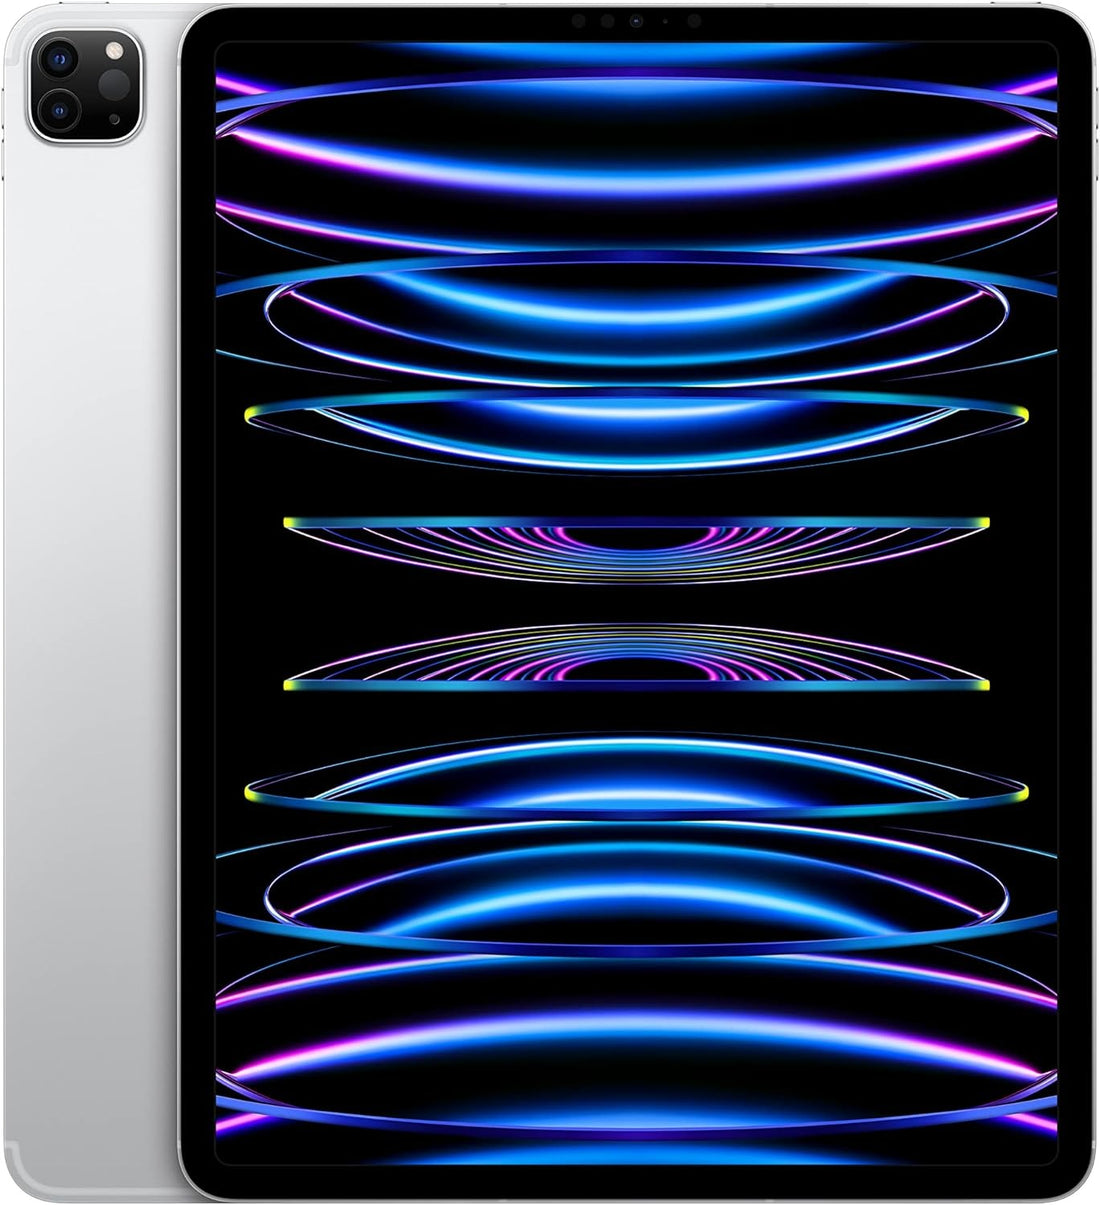 Apple iPad Pro 6th Gen 11in - 256GB (Wifi + Cellular) (Unlocked) - Silver (Refurbished)